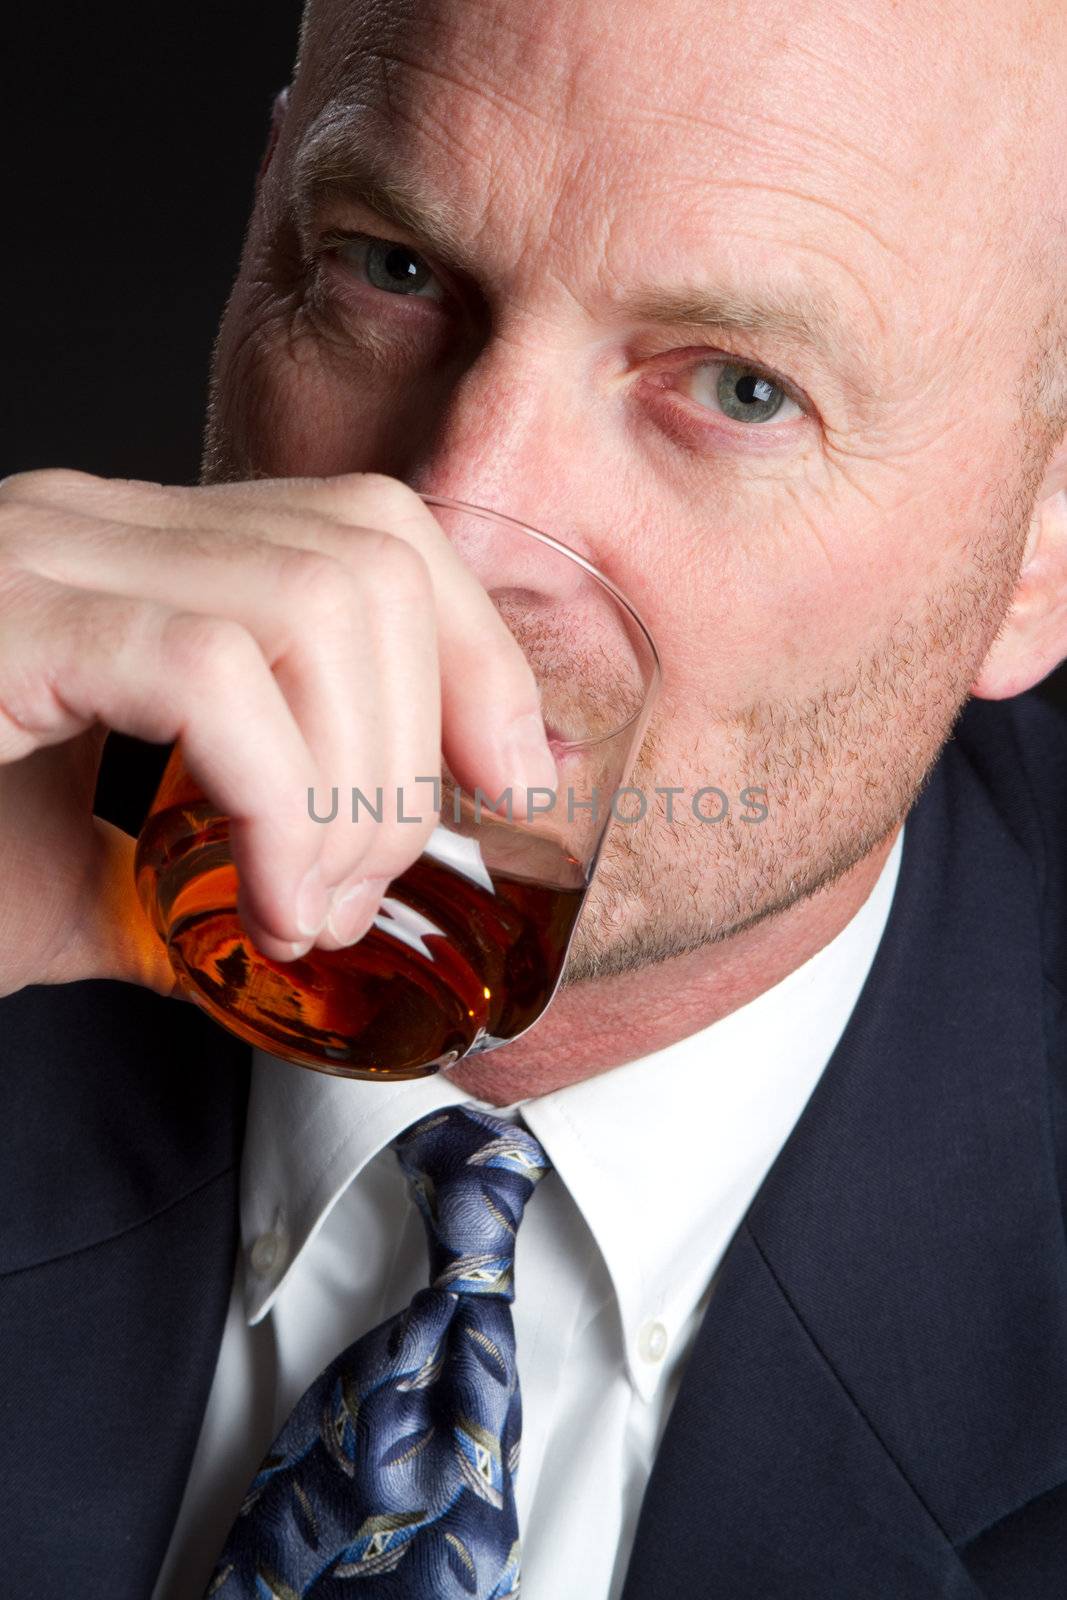 Man Drinking by keeweeboy